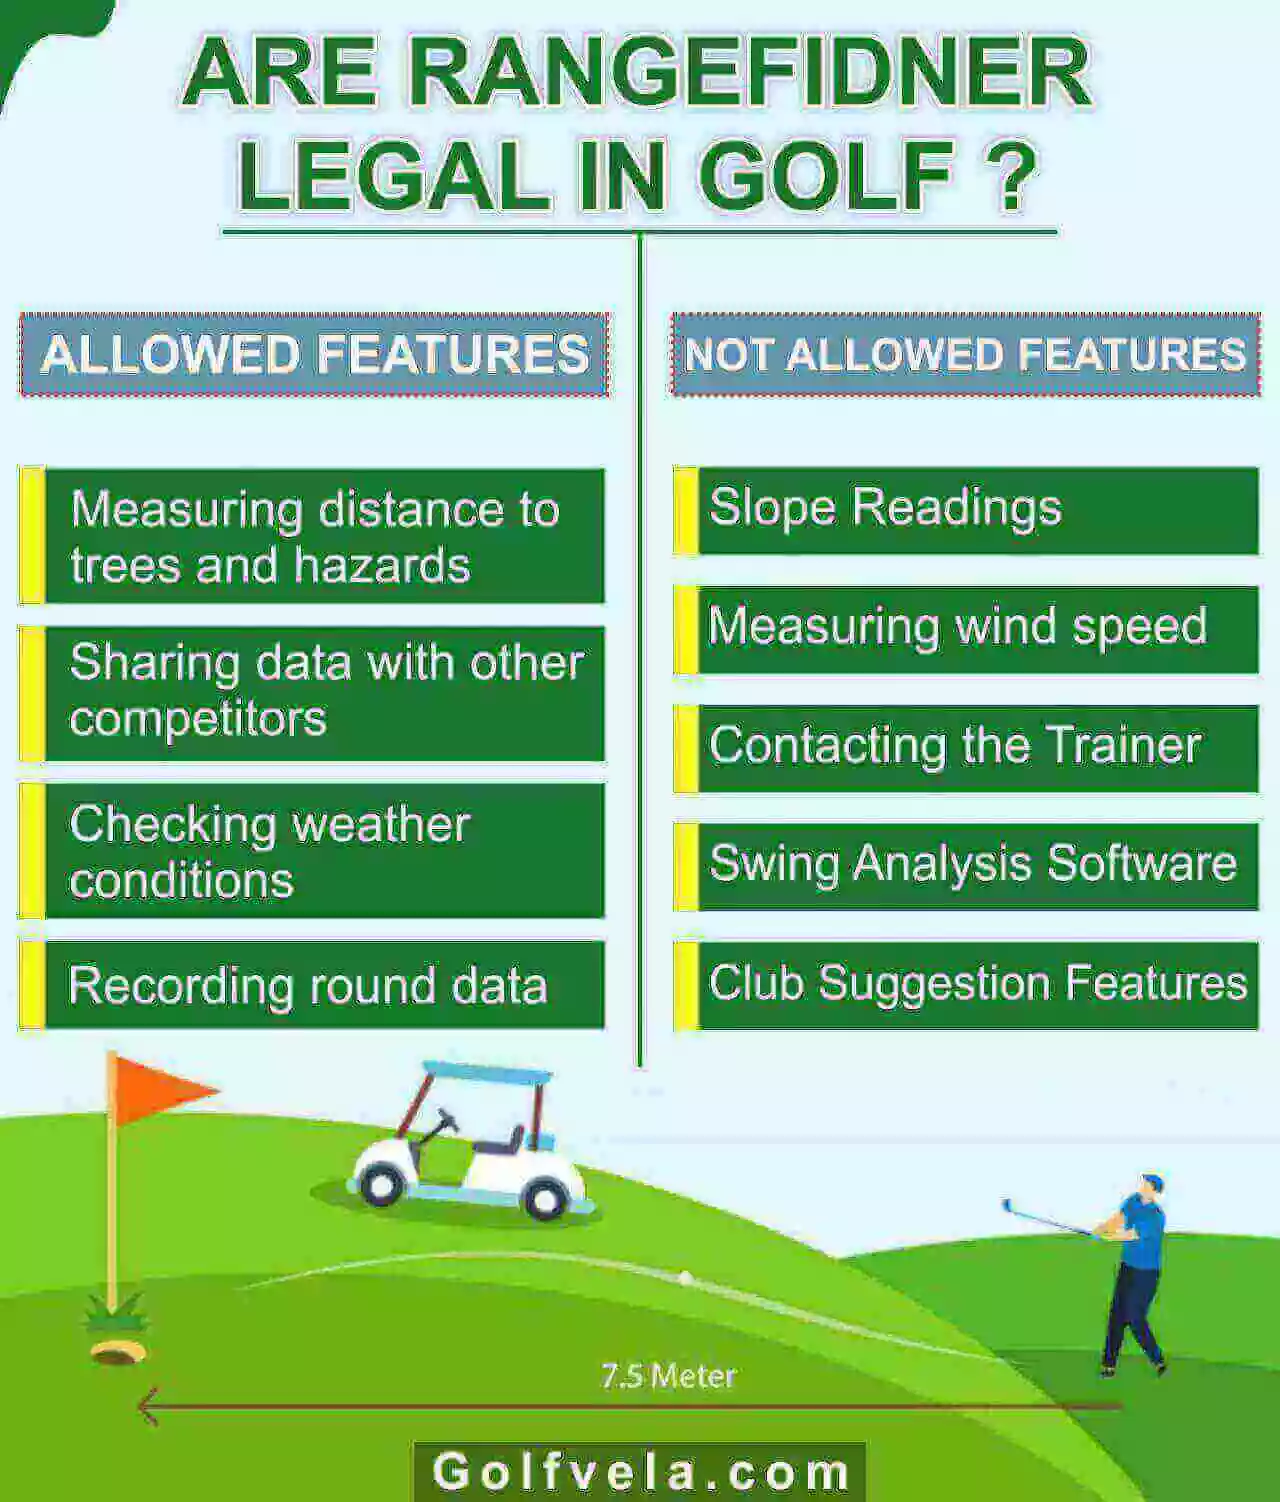 Are Rangefinder legal in golf info